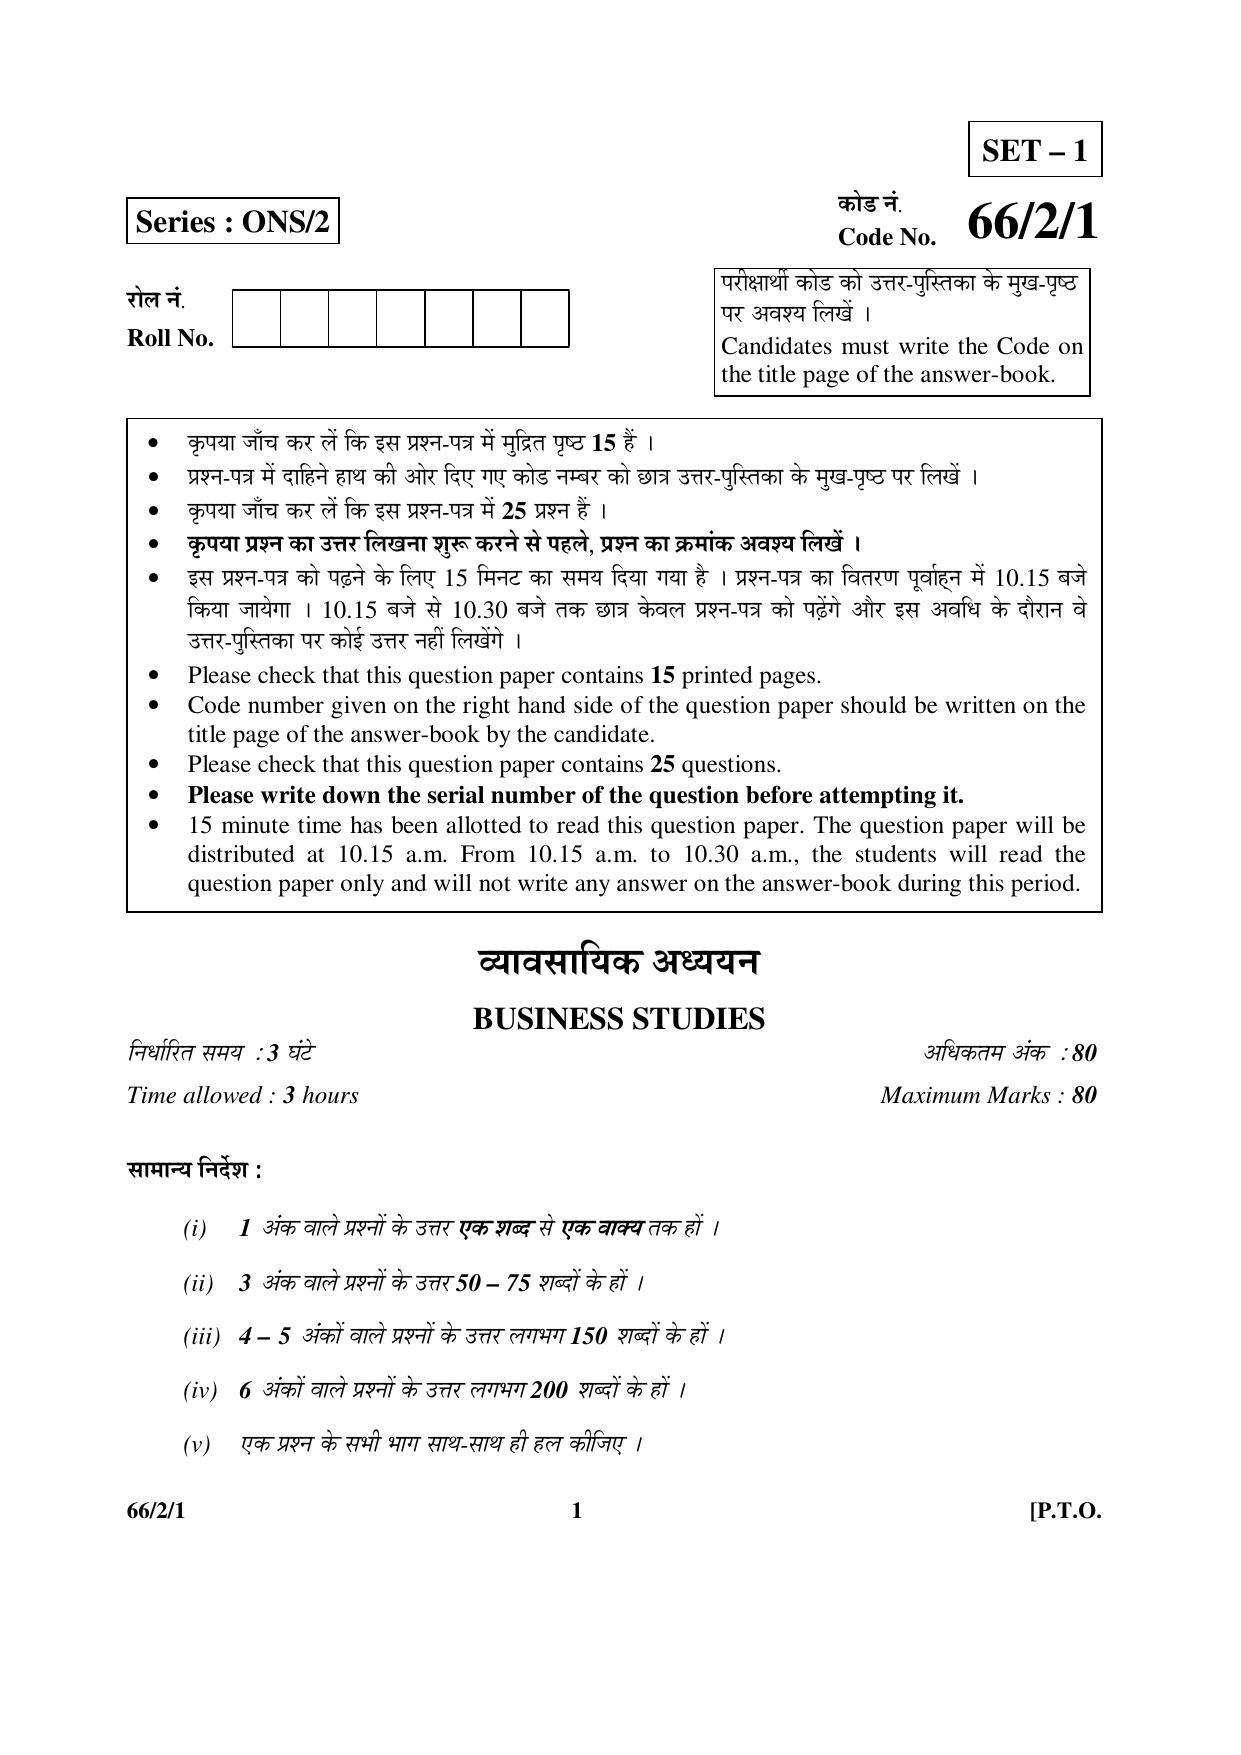 CBSE Class 12 66-2-1 _Business Studies_ 2016 Question Paper - Page 1